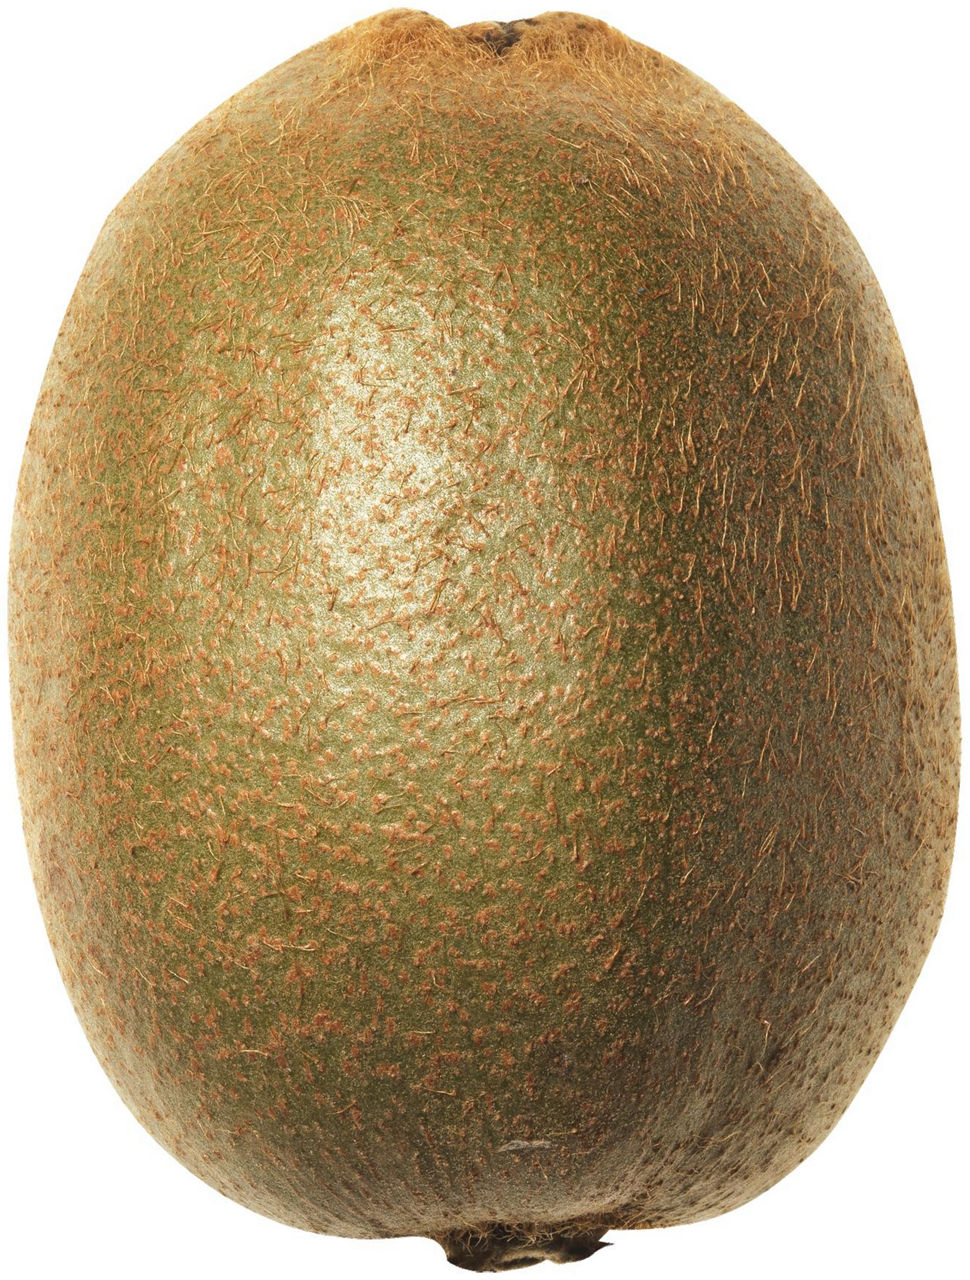 Kiwi kg 1